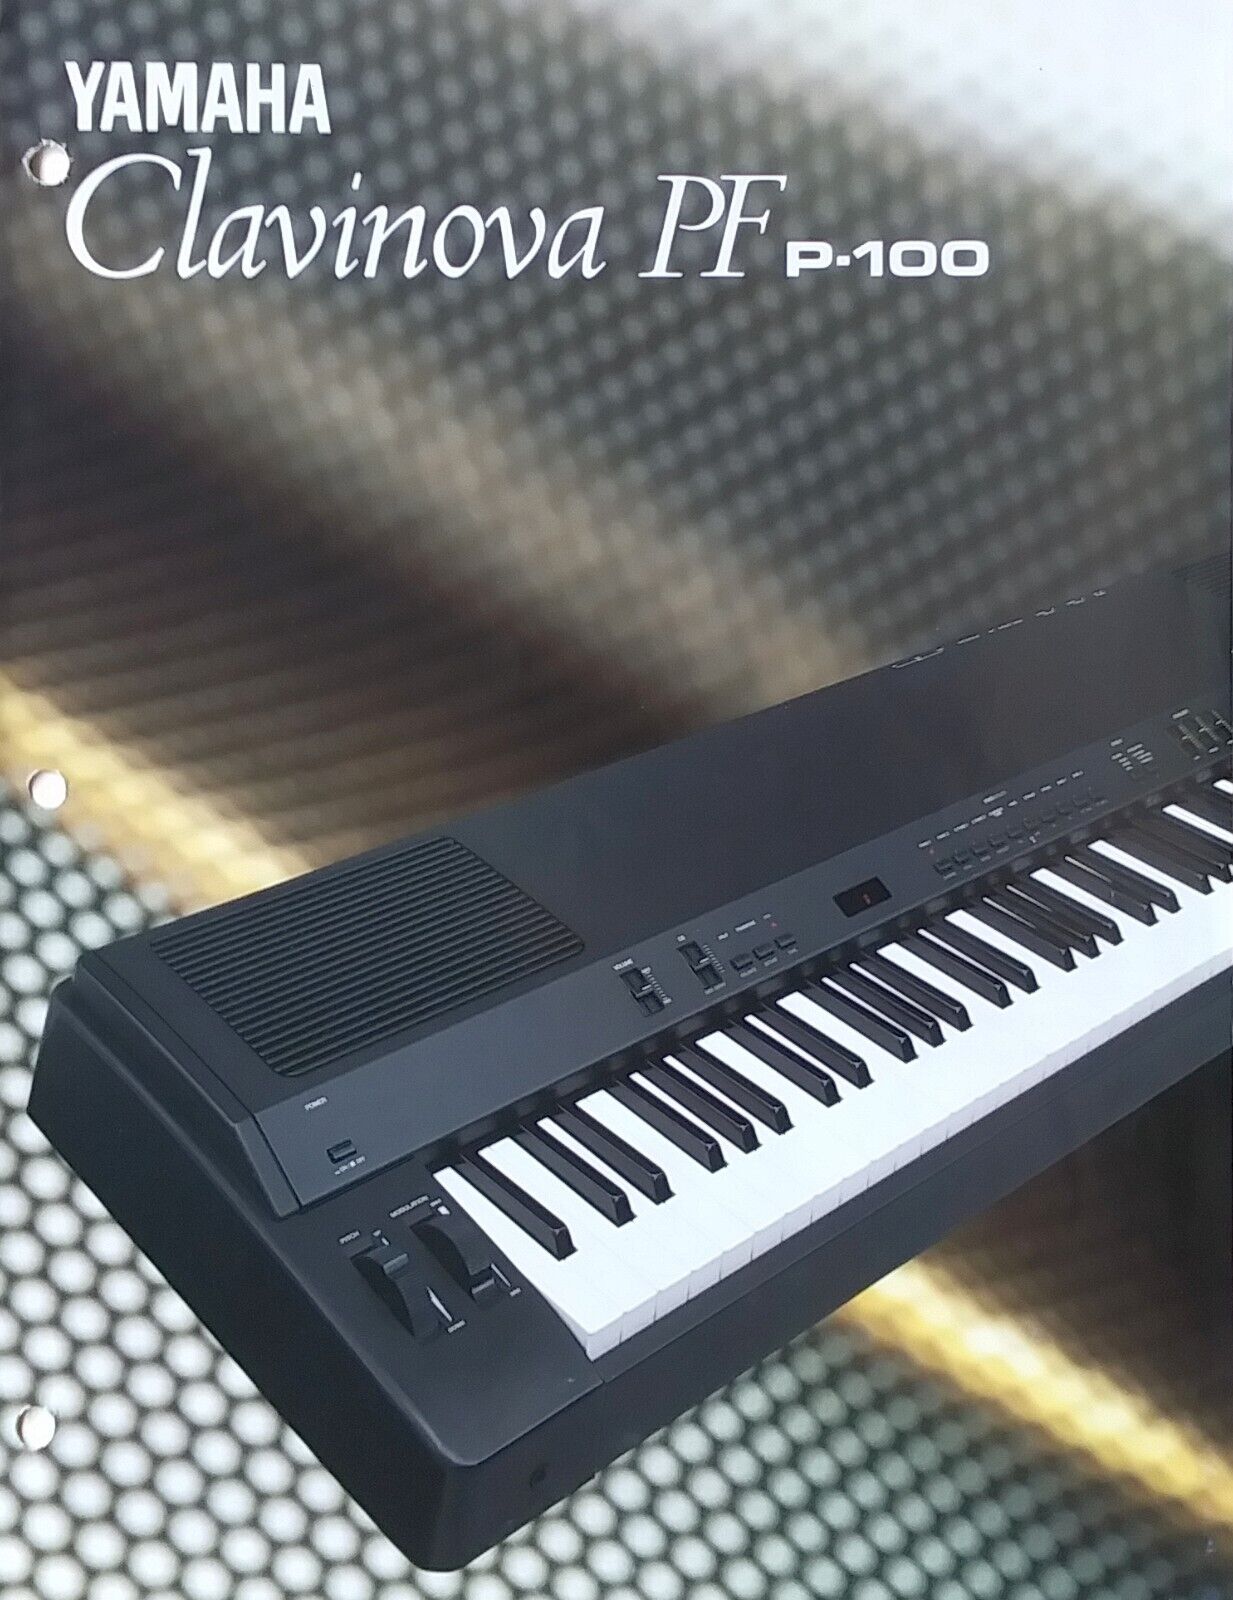 Yamaha P-100 Clavinova PF Digital Piano Original 90s Color 4 Page Brochure Japan